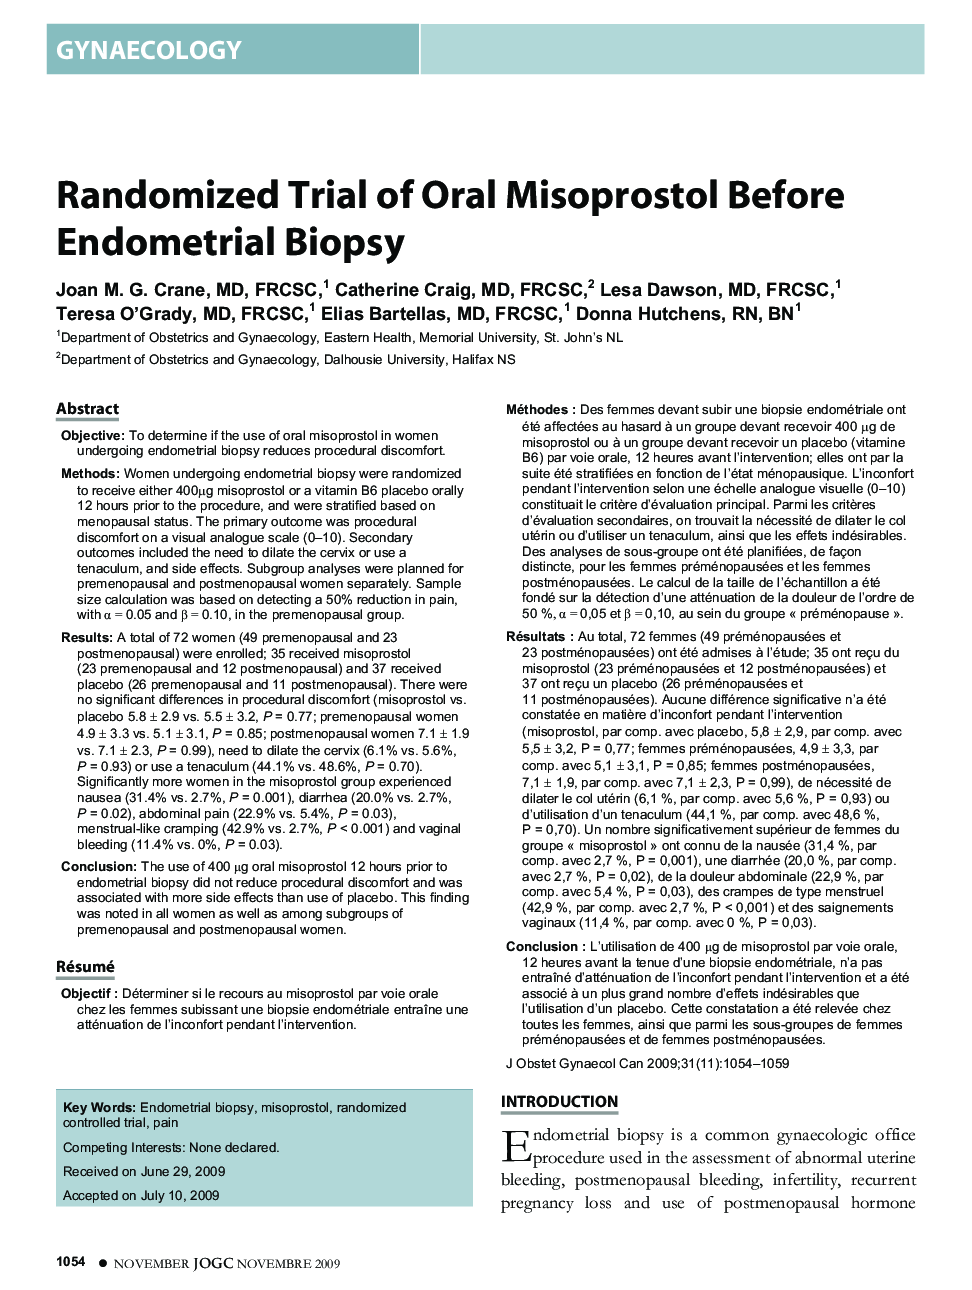 Randomized Trial of Oral Misoprostol Before Endometrial Biopsy